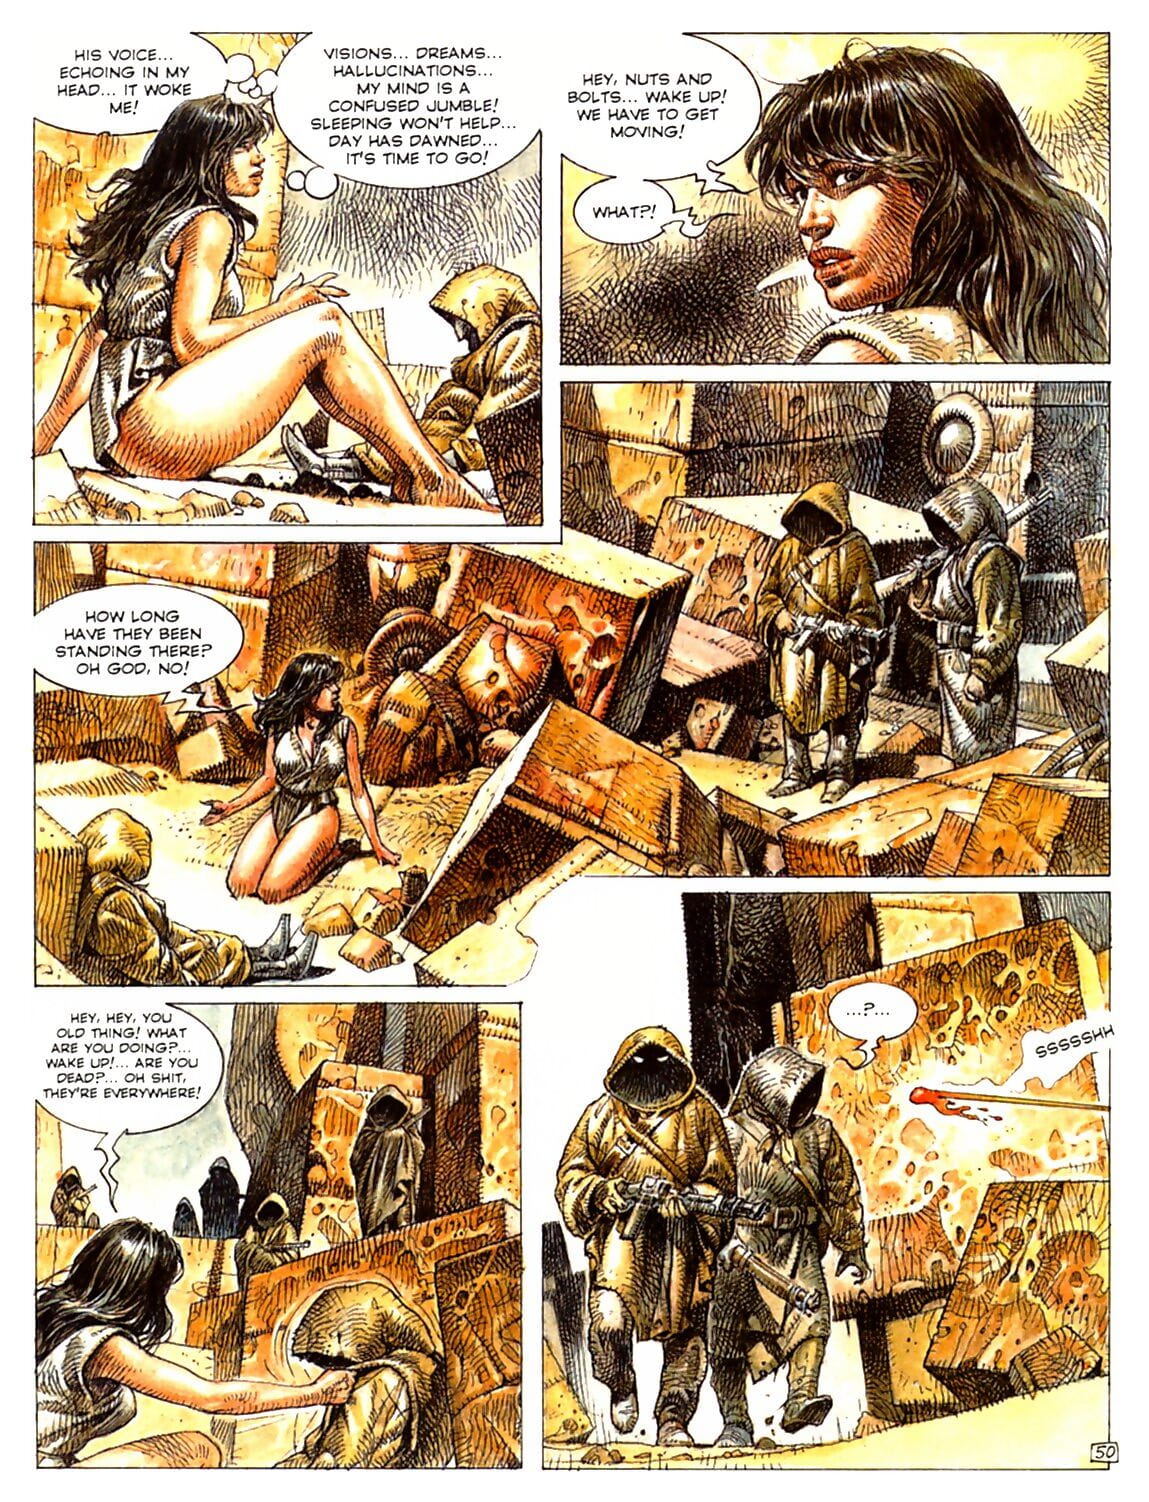 Druuna 7 - The Forgotten Planet - part 2 page 1